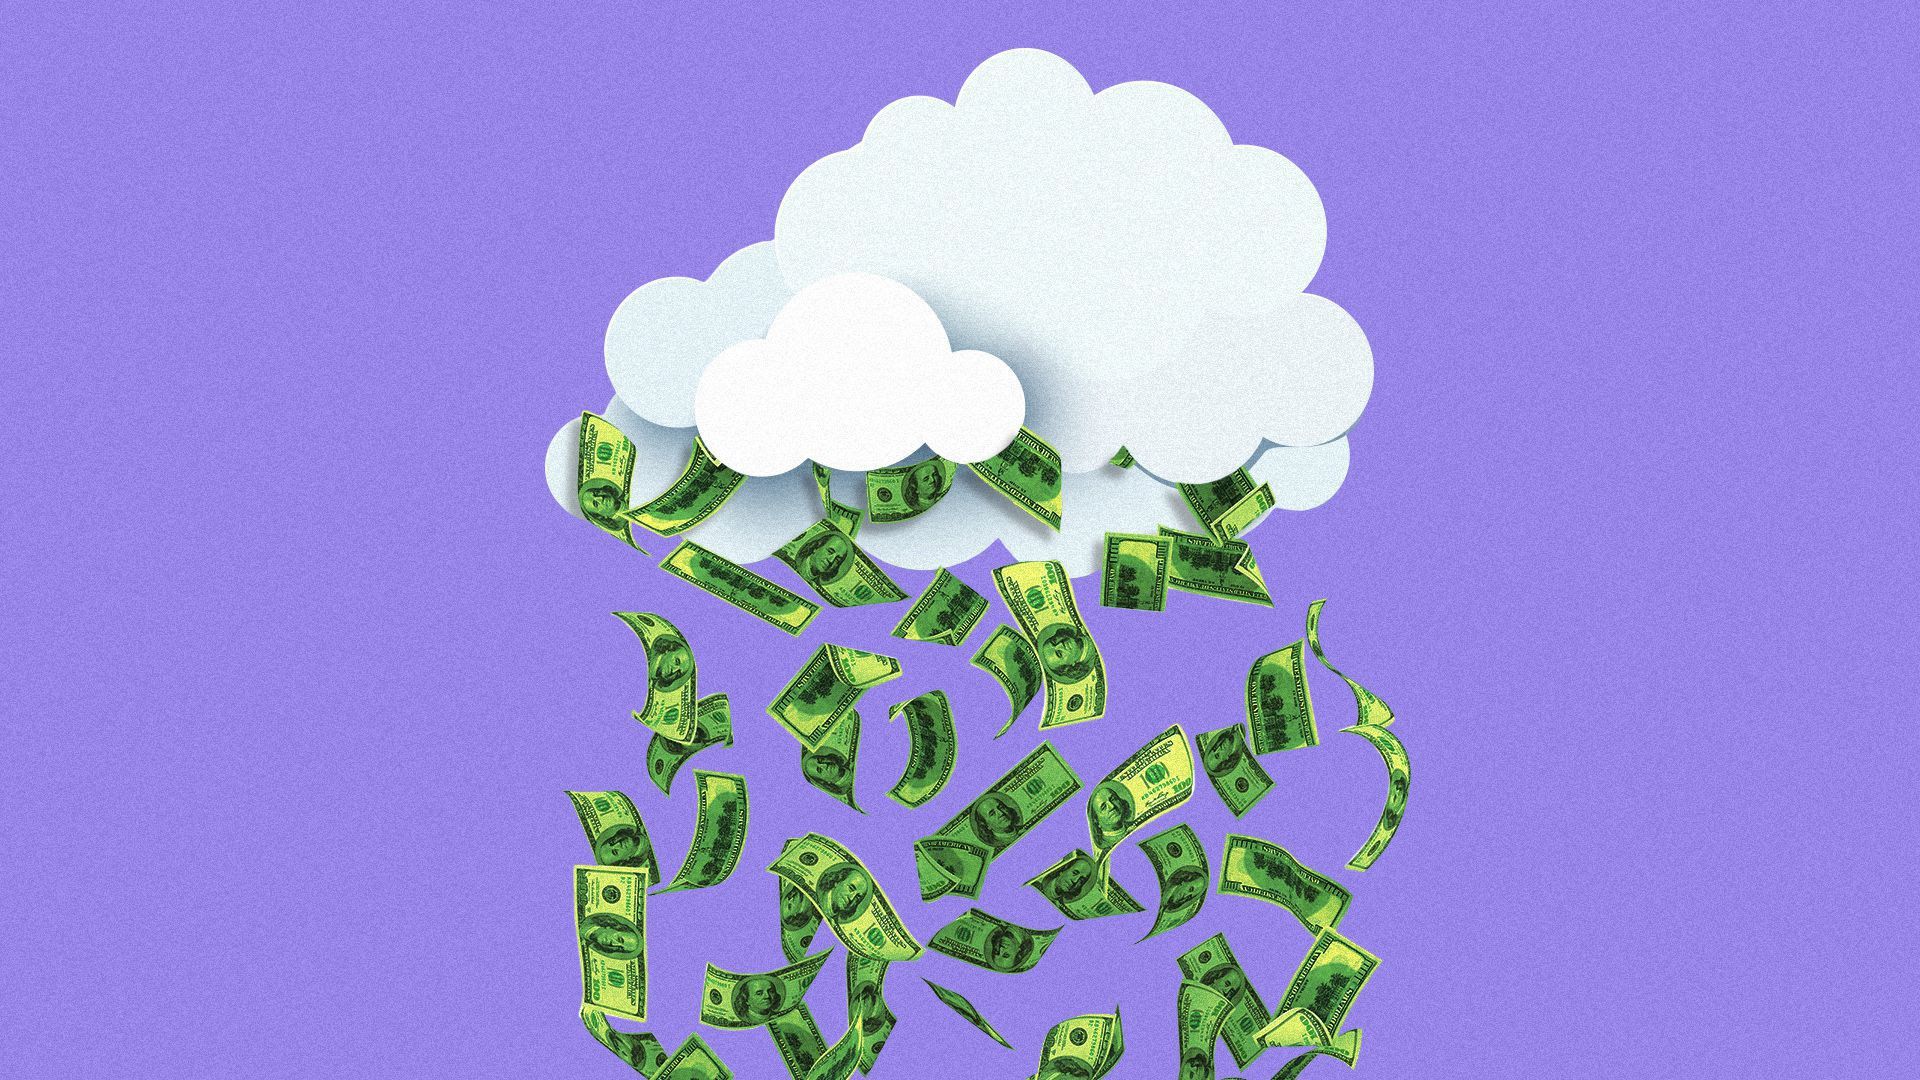 Illustration of dollar bills falling from a cloud.